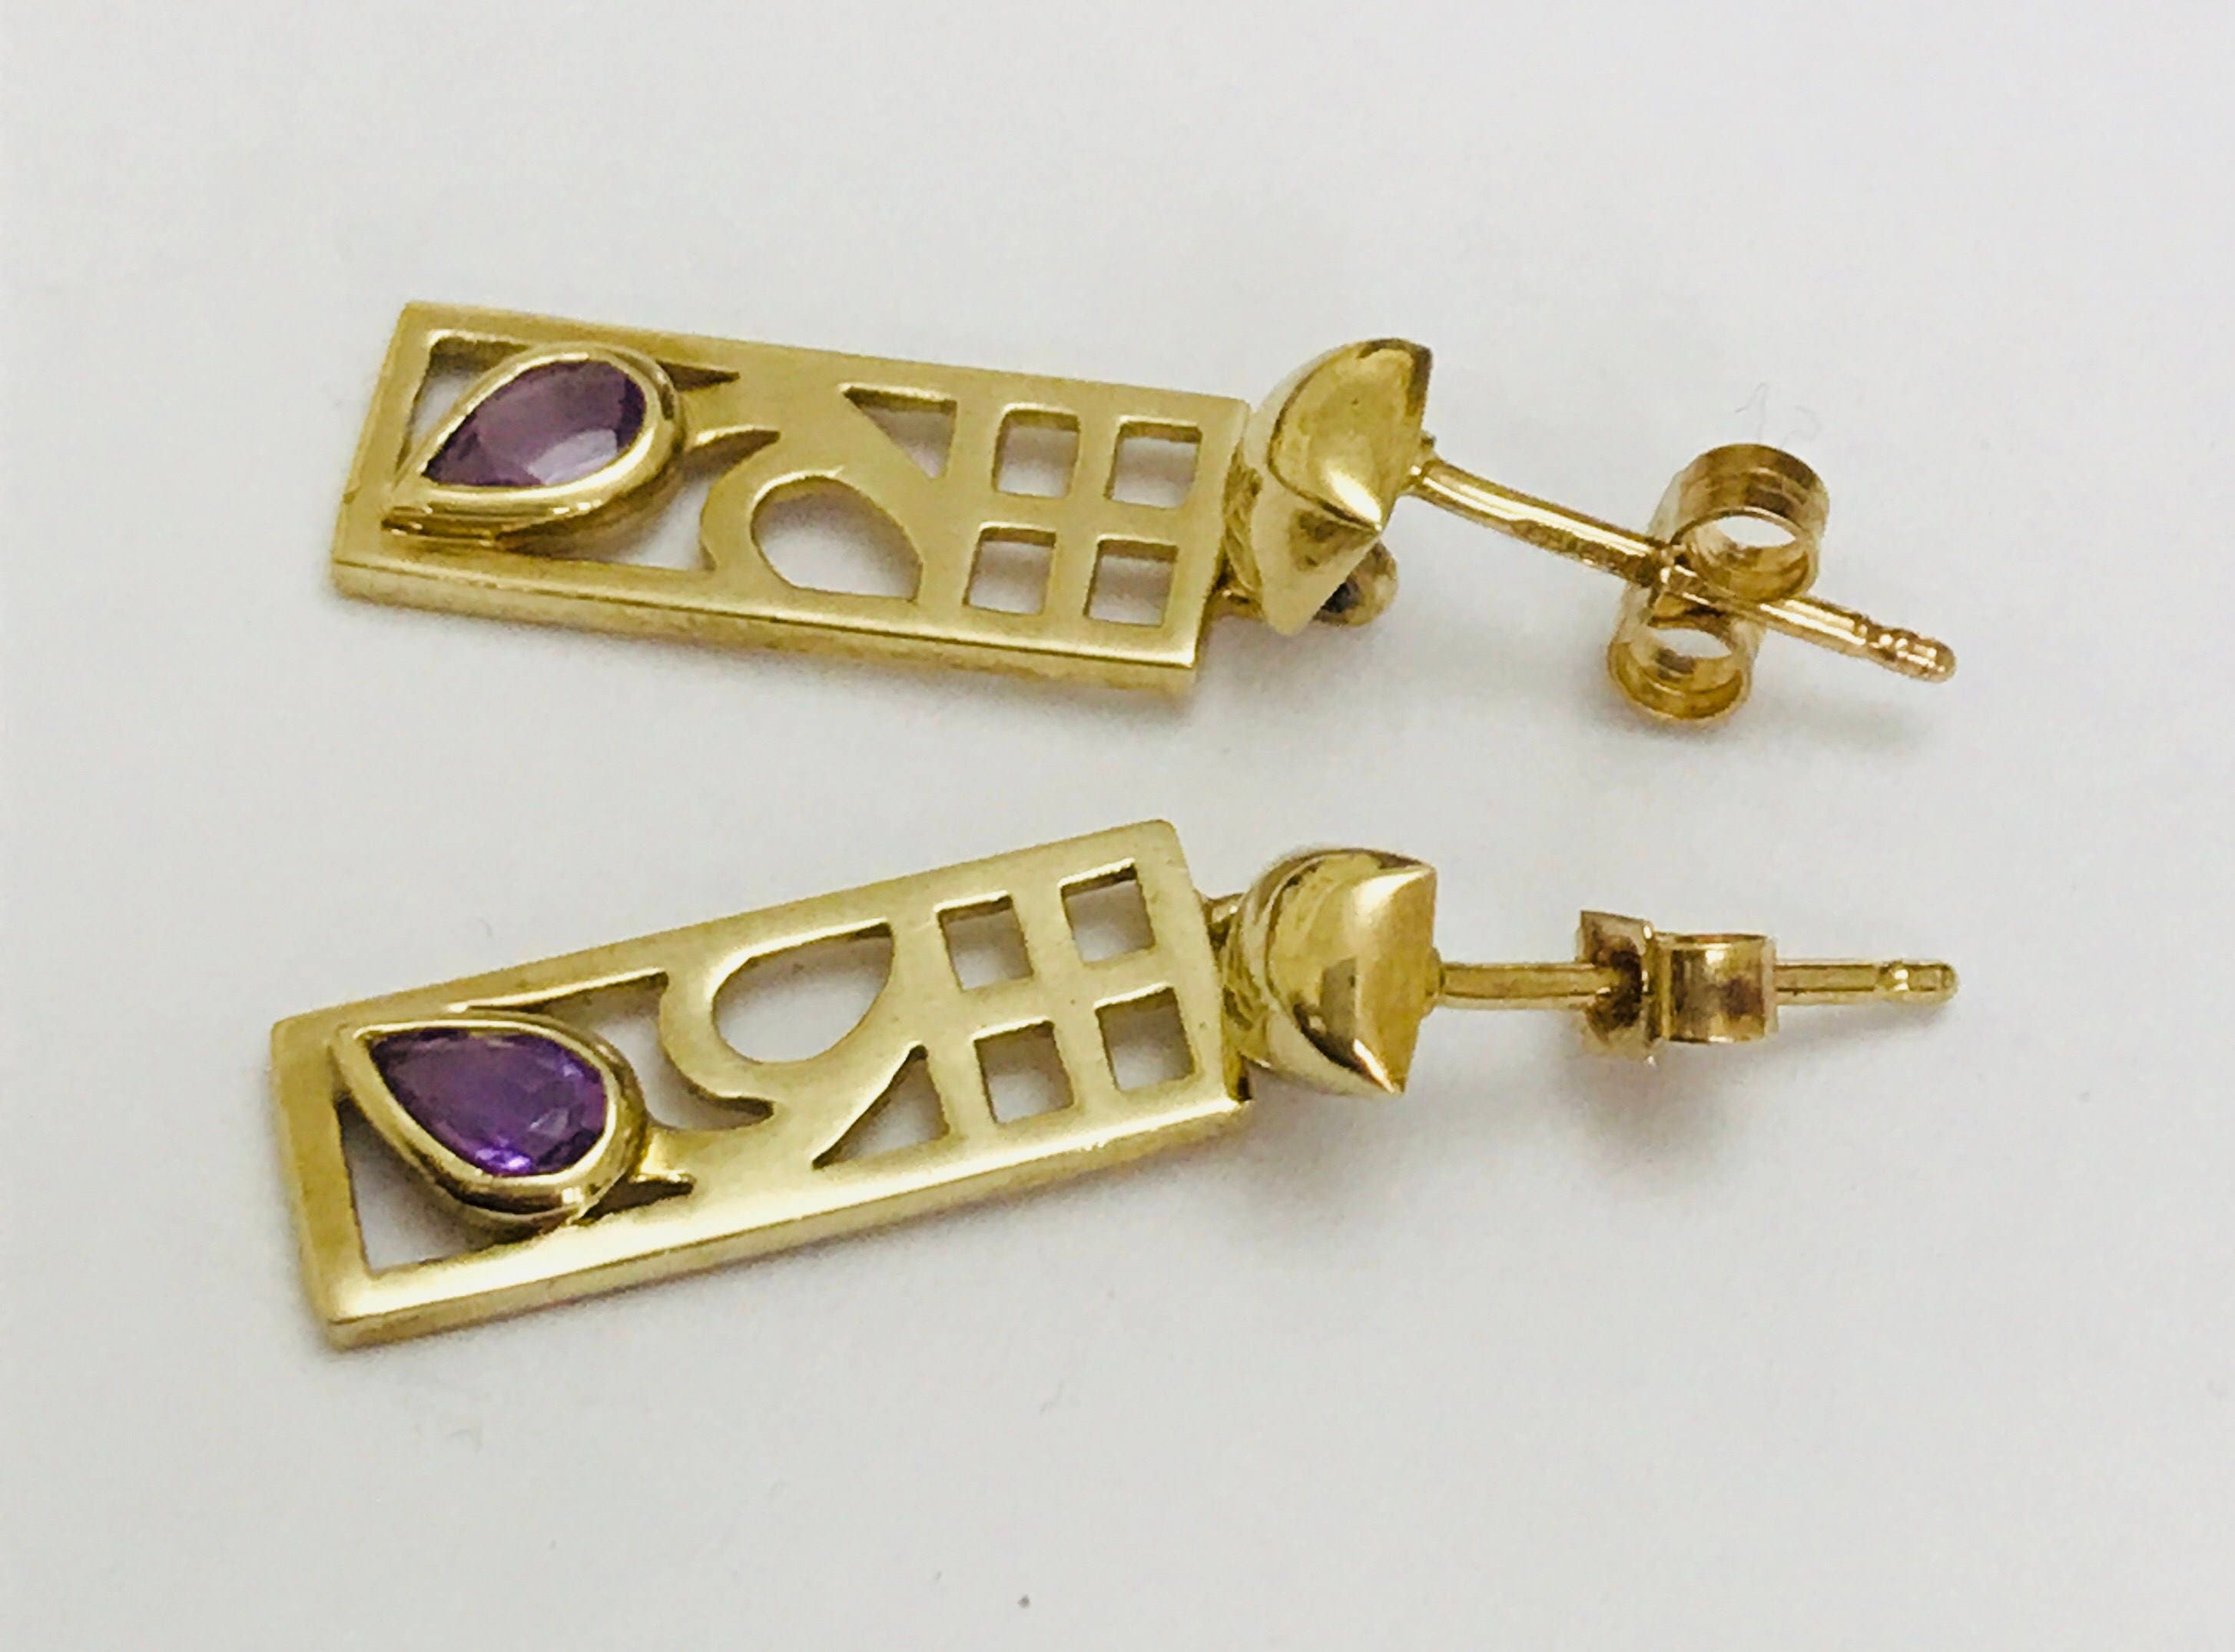 Stunning vintage Art Deco style 9ct gold Amethyst earrings